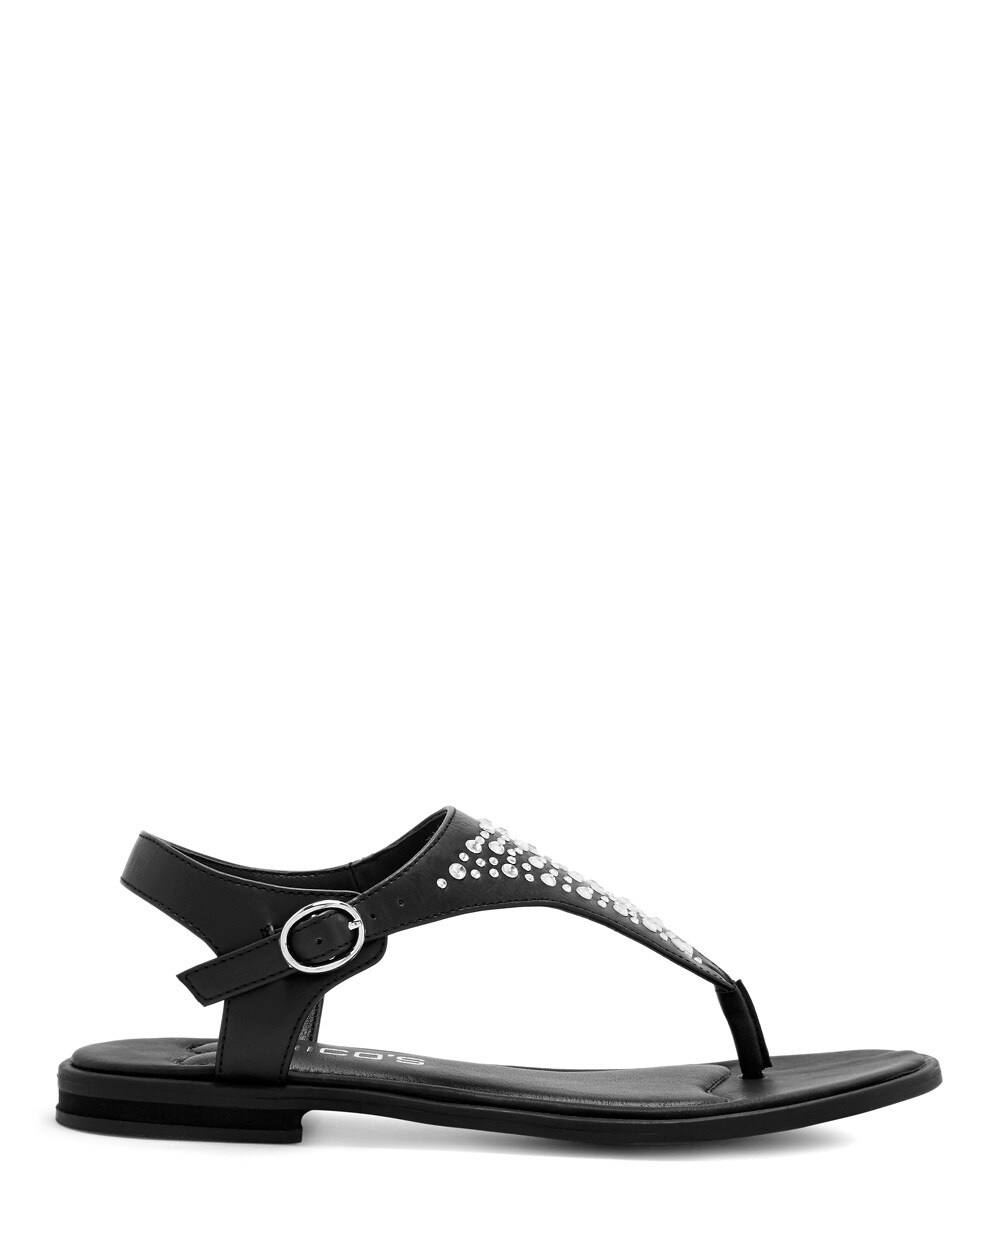 Tahira Black Embellished Sandal